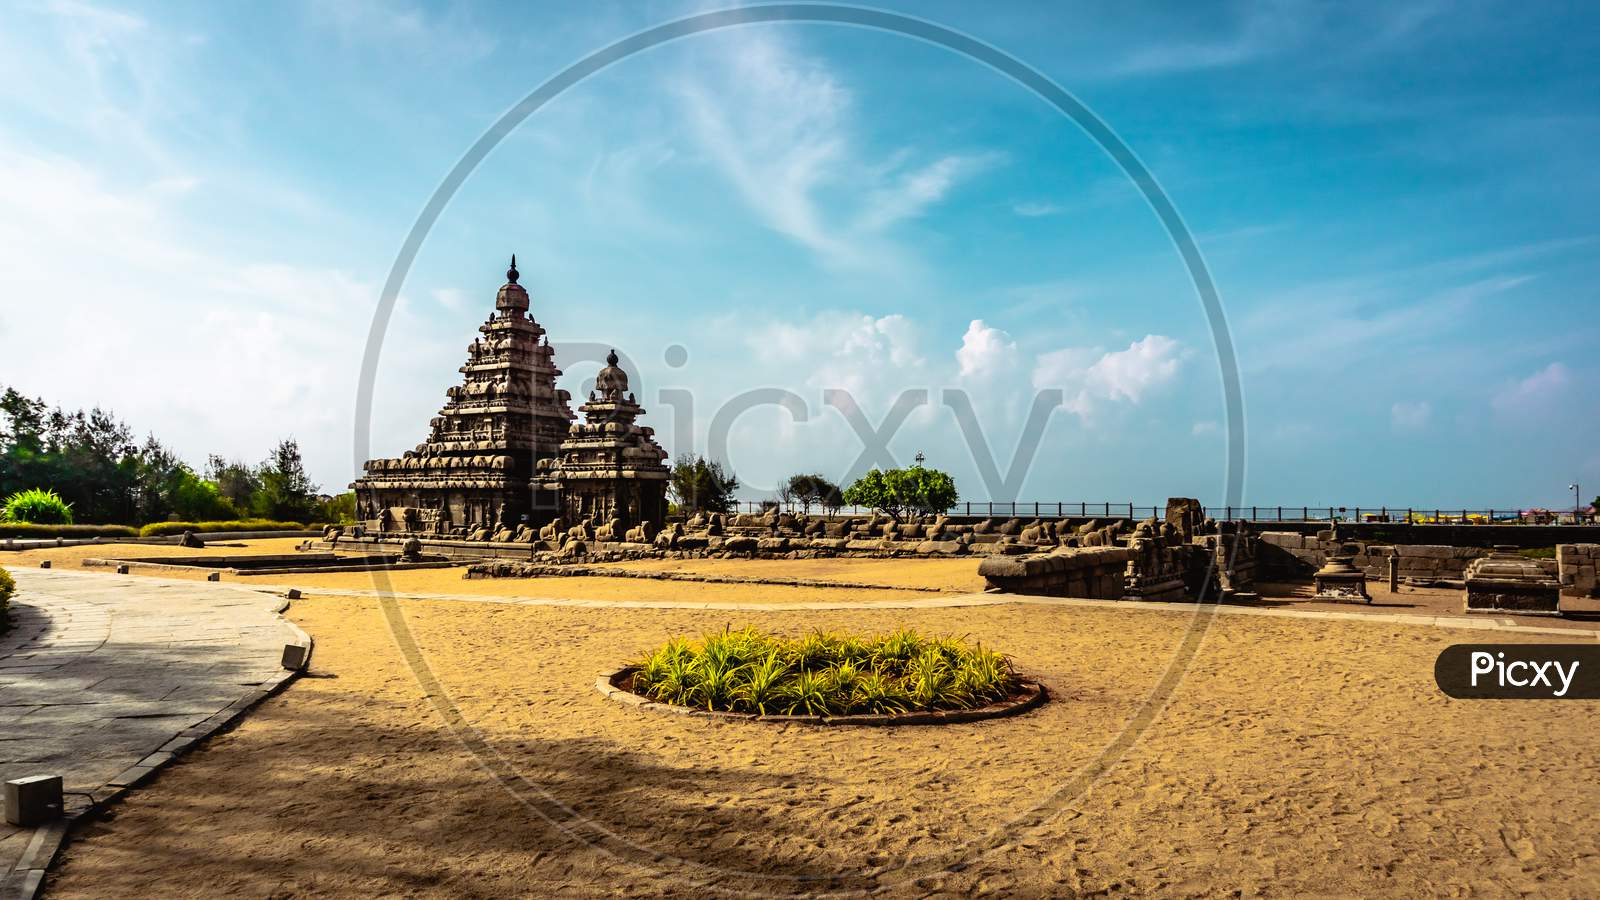 Shore temple built by Pallavas is UNESCO`s World Heritage Site located at Mamallapuram or Mahabalipuram in Tamil Nadu, South India.